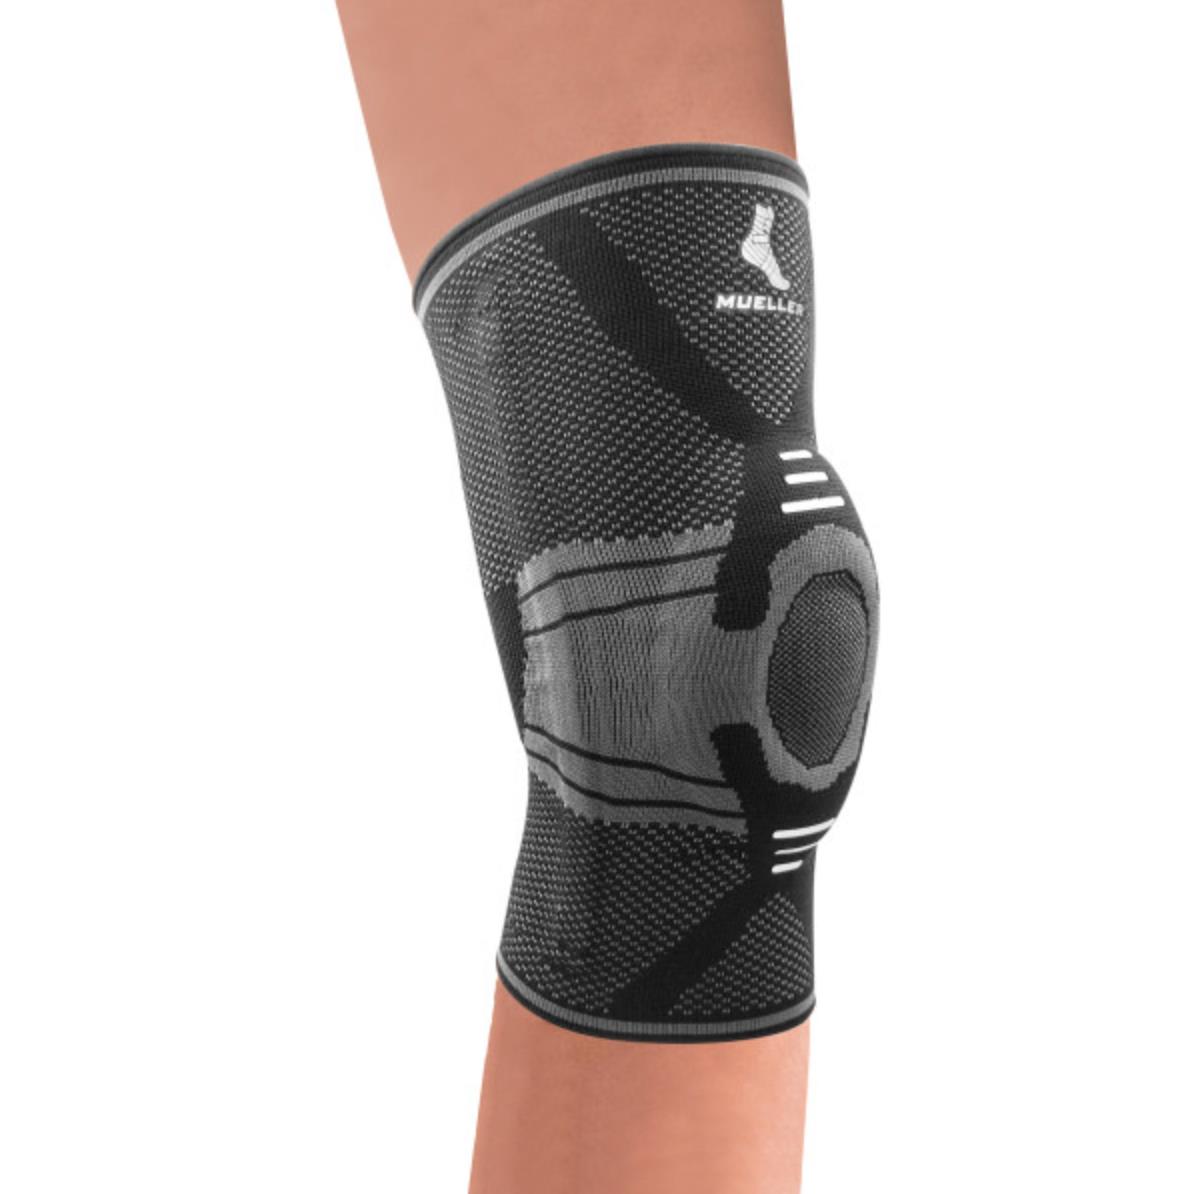 Mueller Sports Medicine Omniforce Knee Stabilizer KS-700 Small - X-large